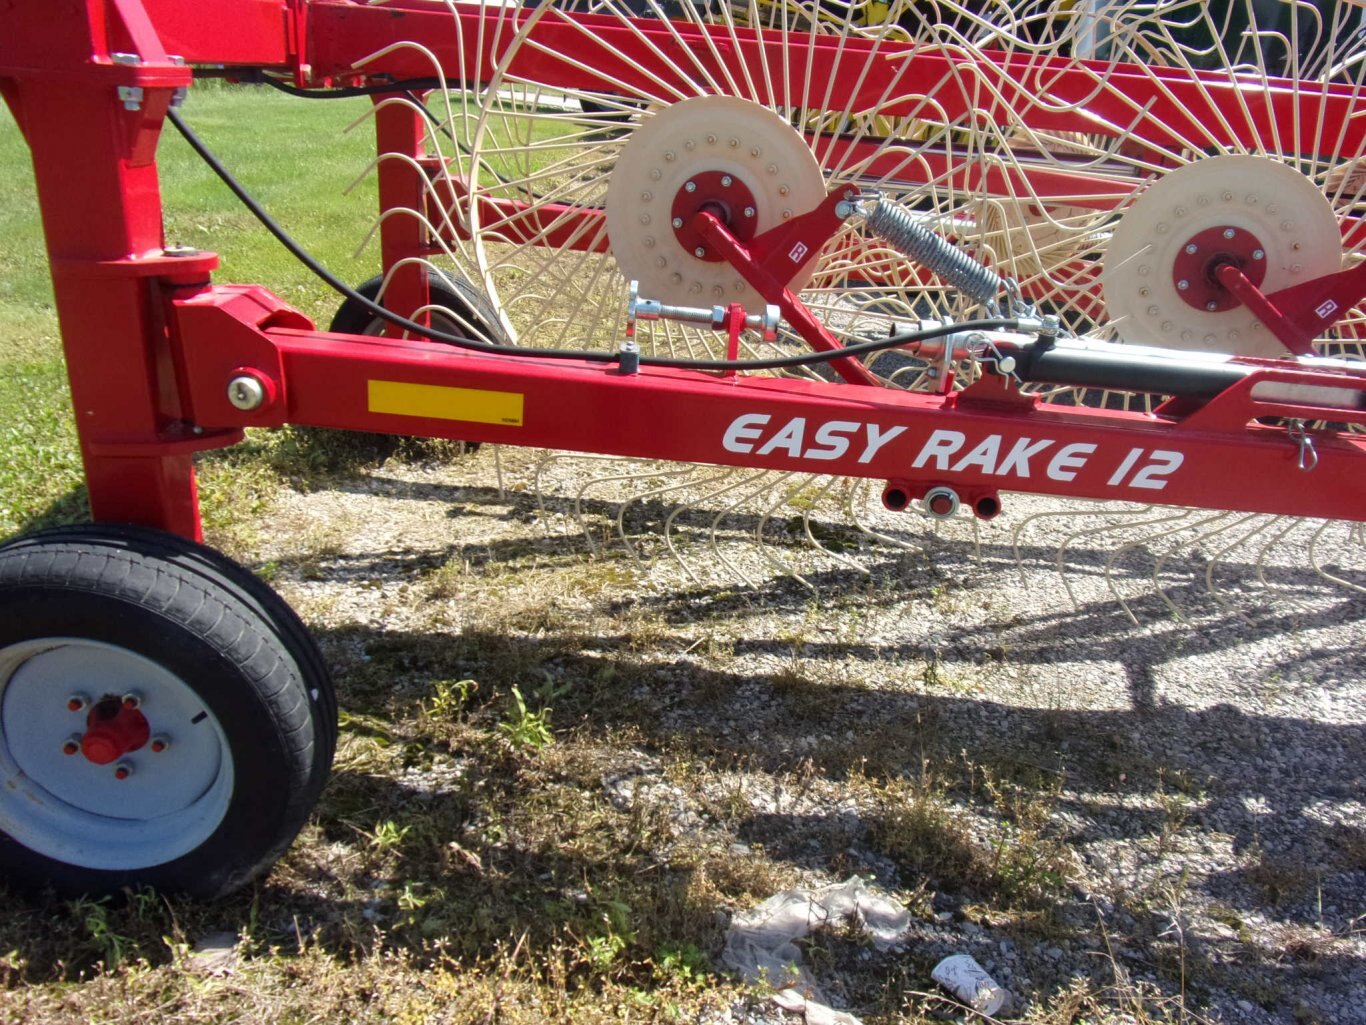 Farm King 12 Wheel Easy Rake